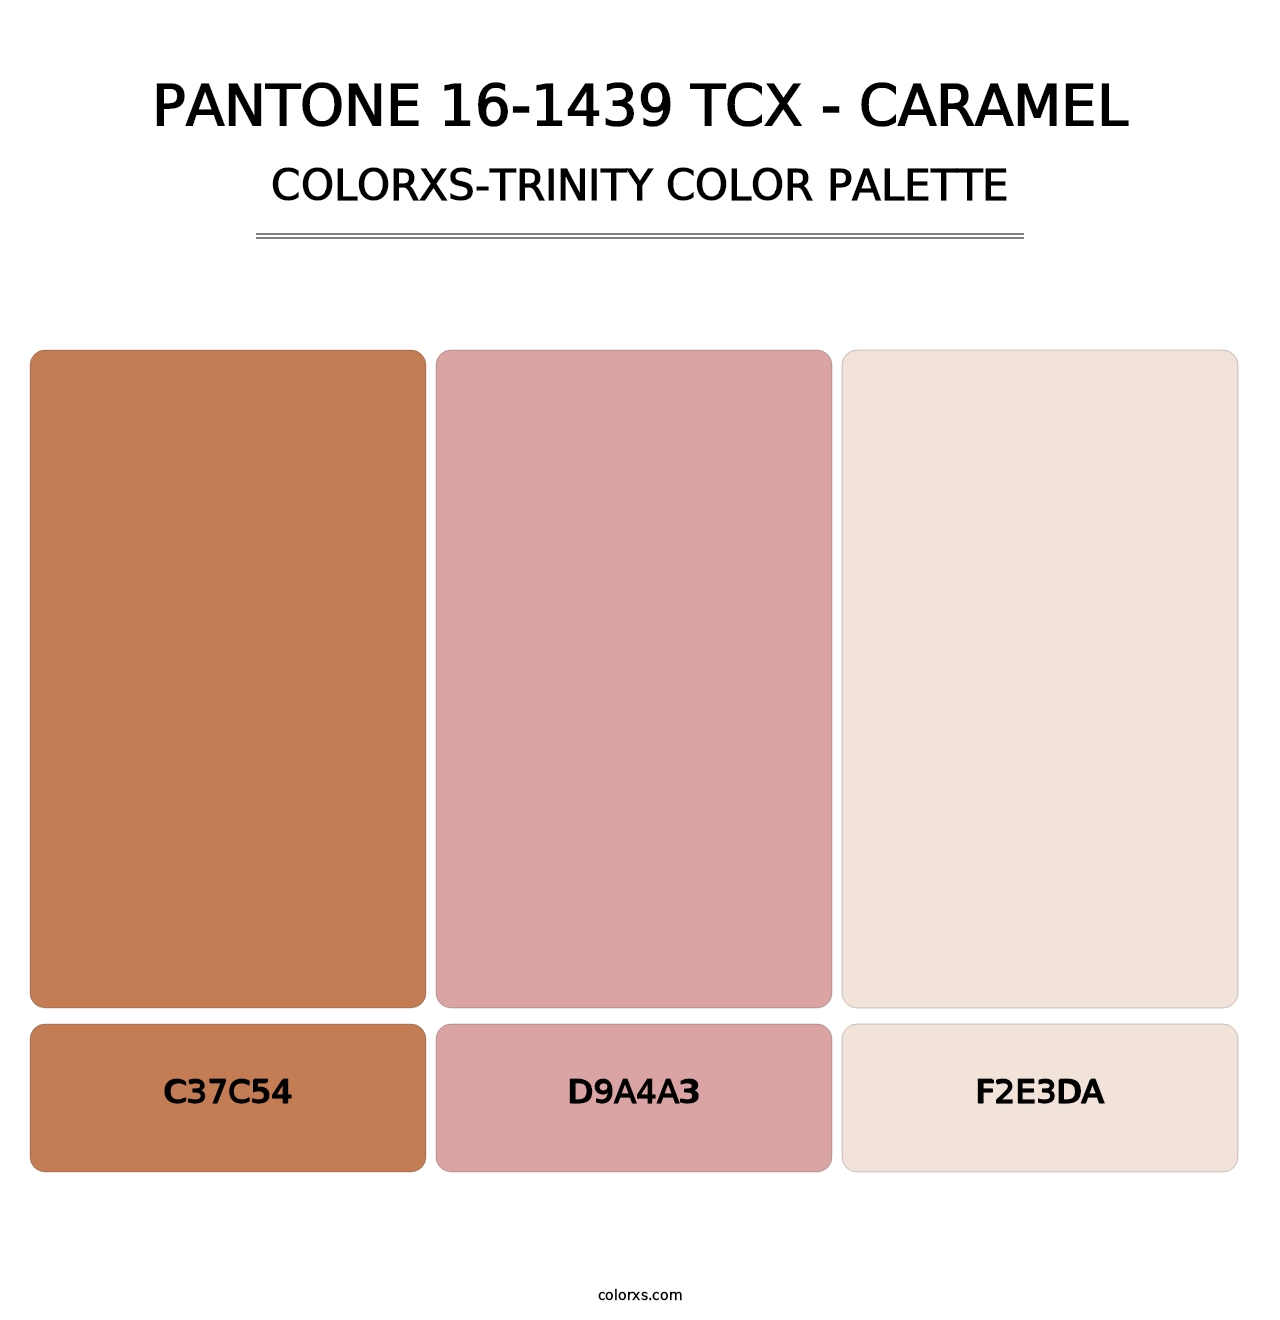 PANTONE 16-1439 TCX - Caramel - Colorxs Trinity Palette